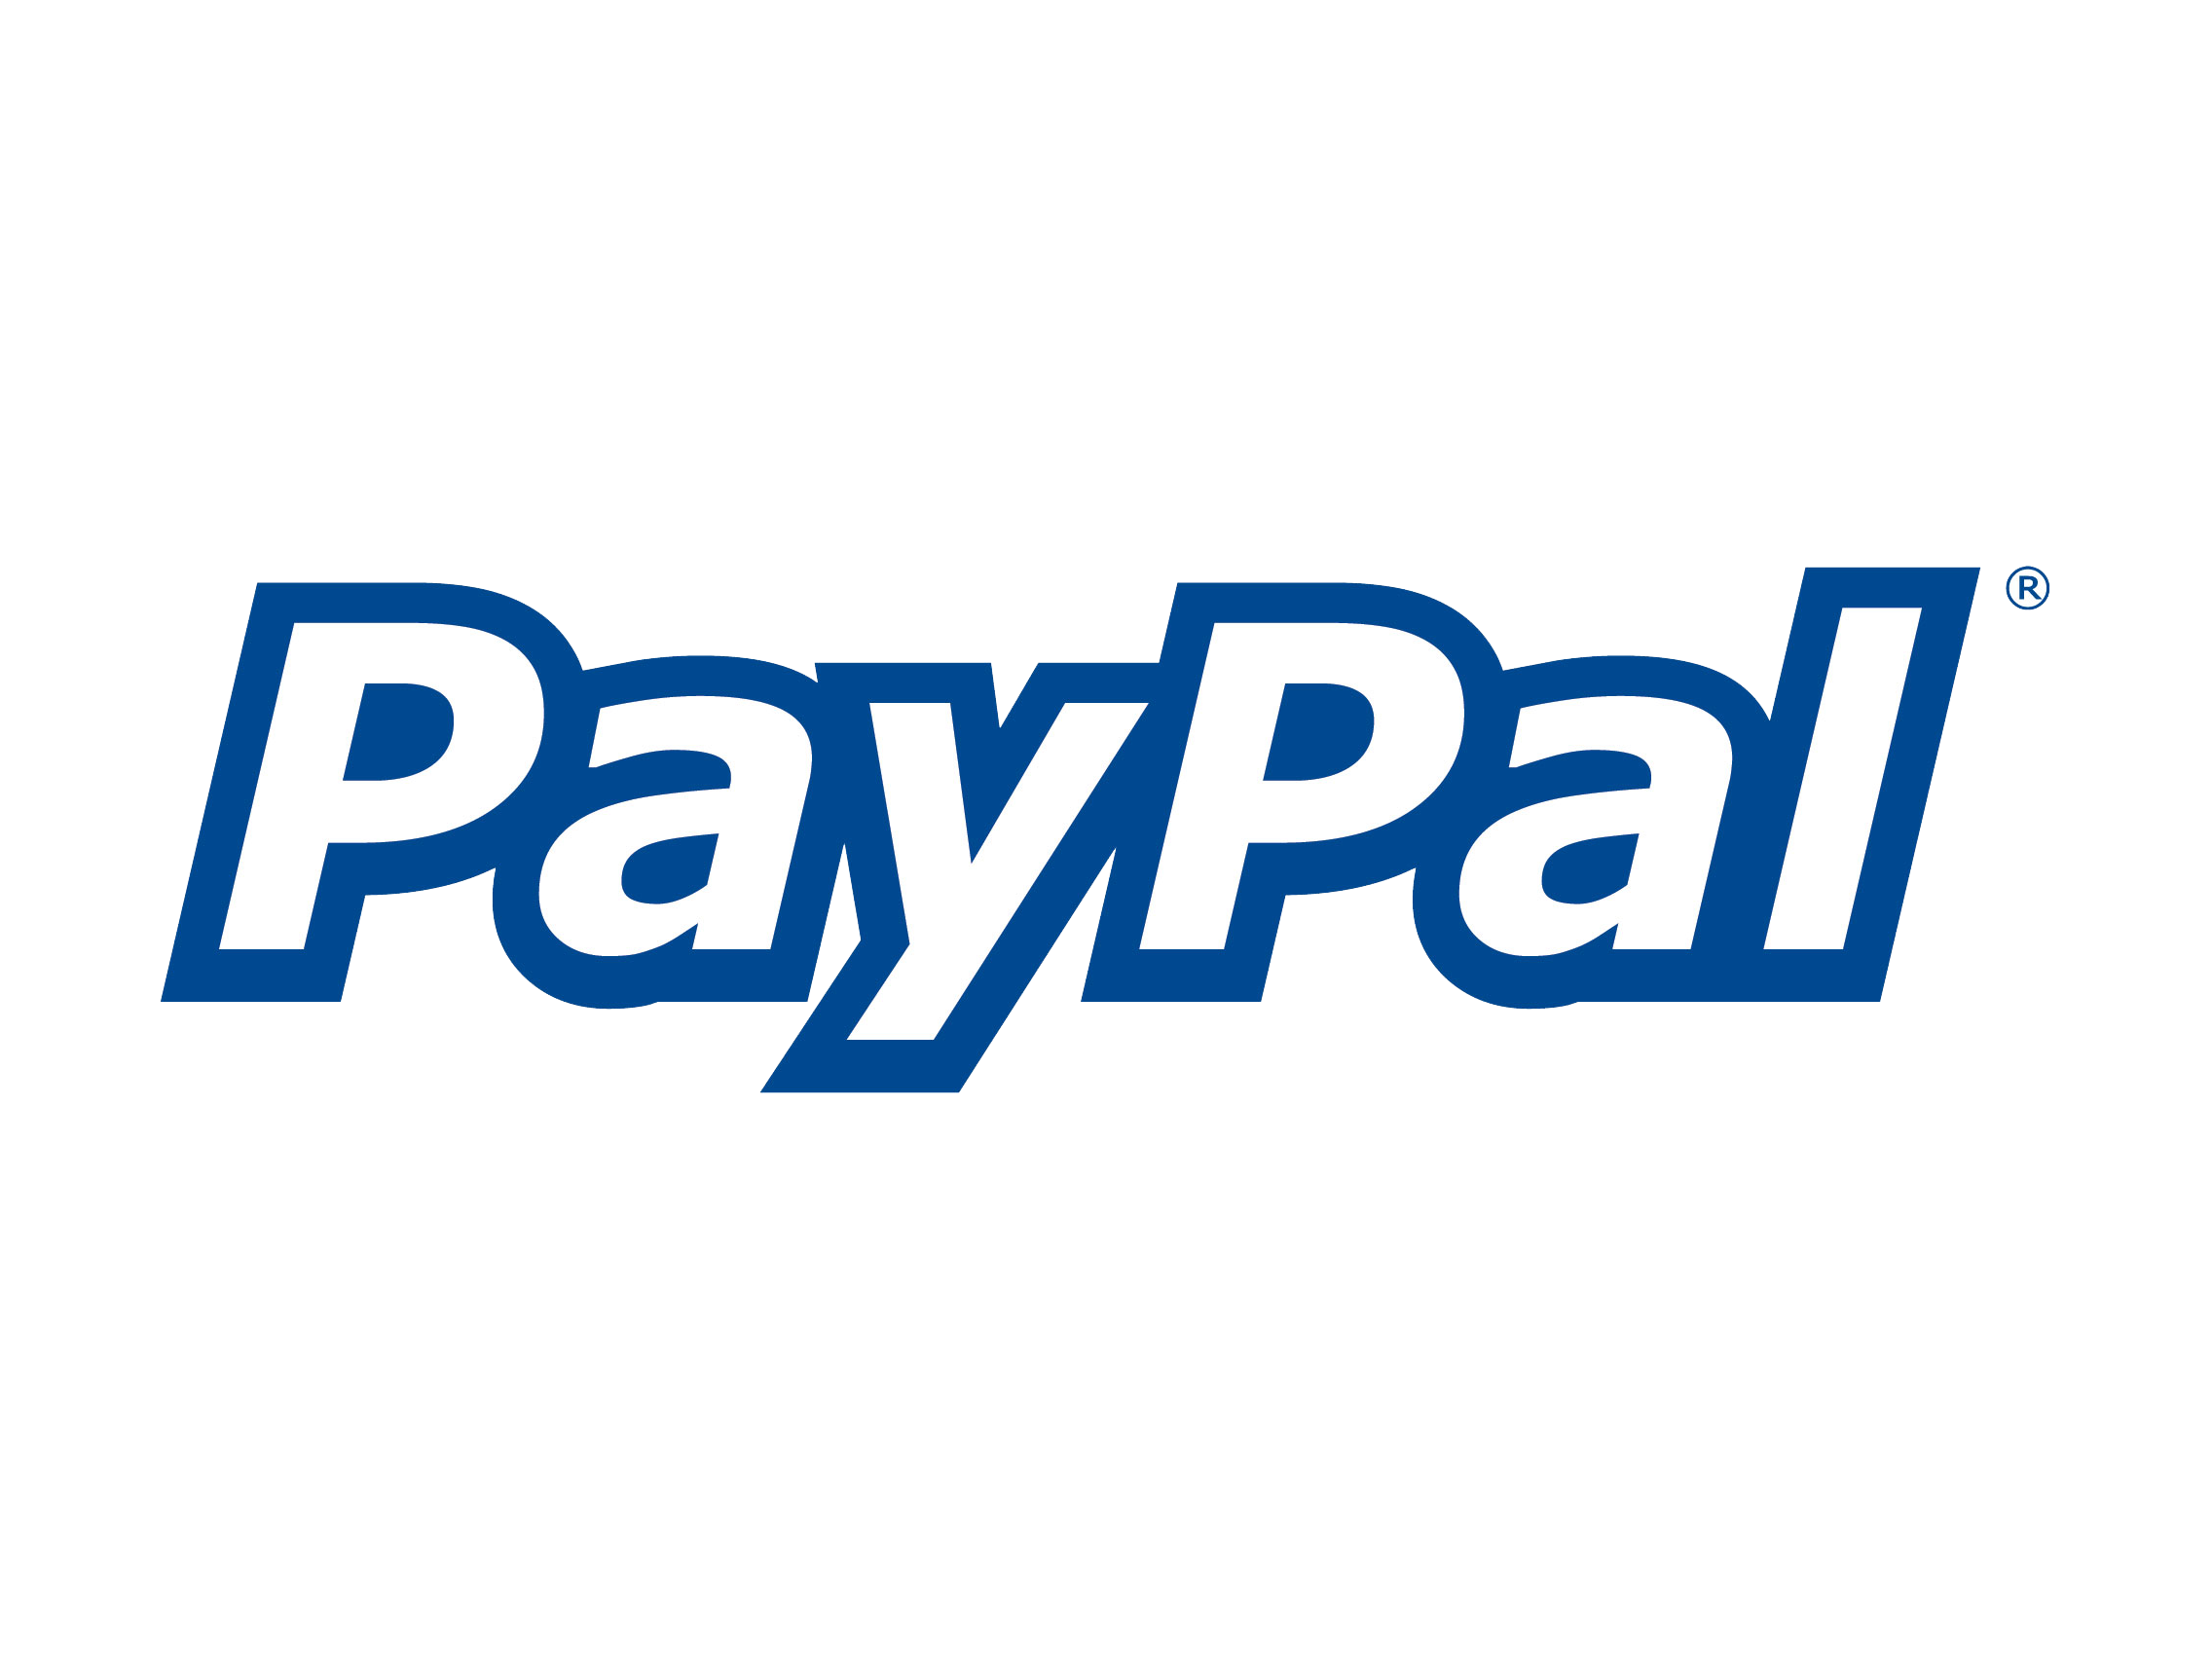 paypal logo transparent background